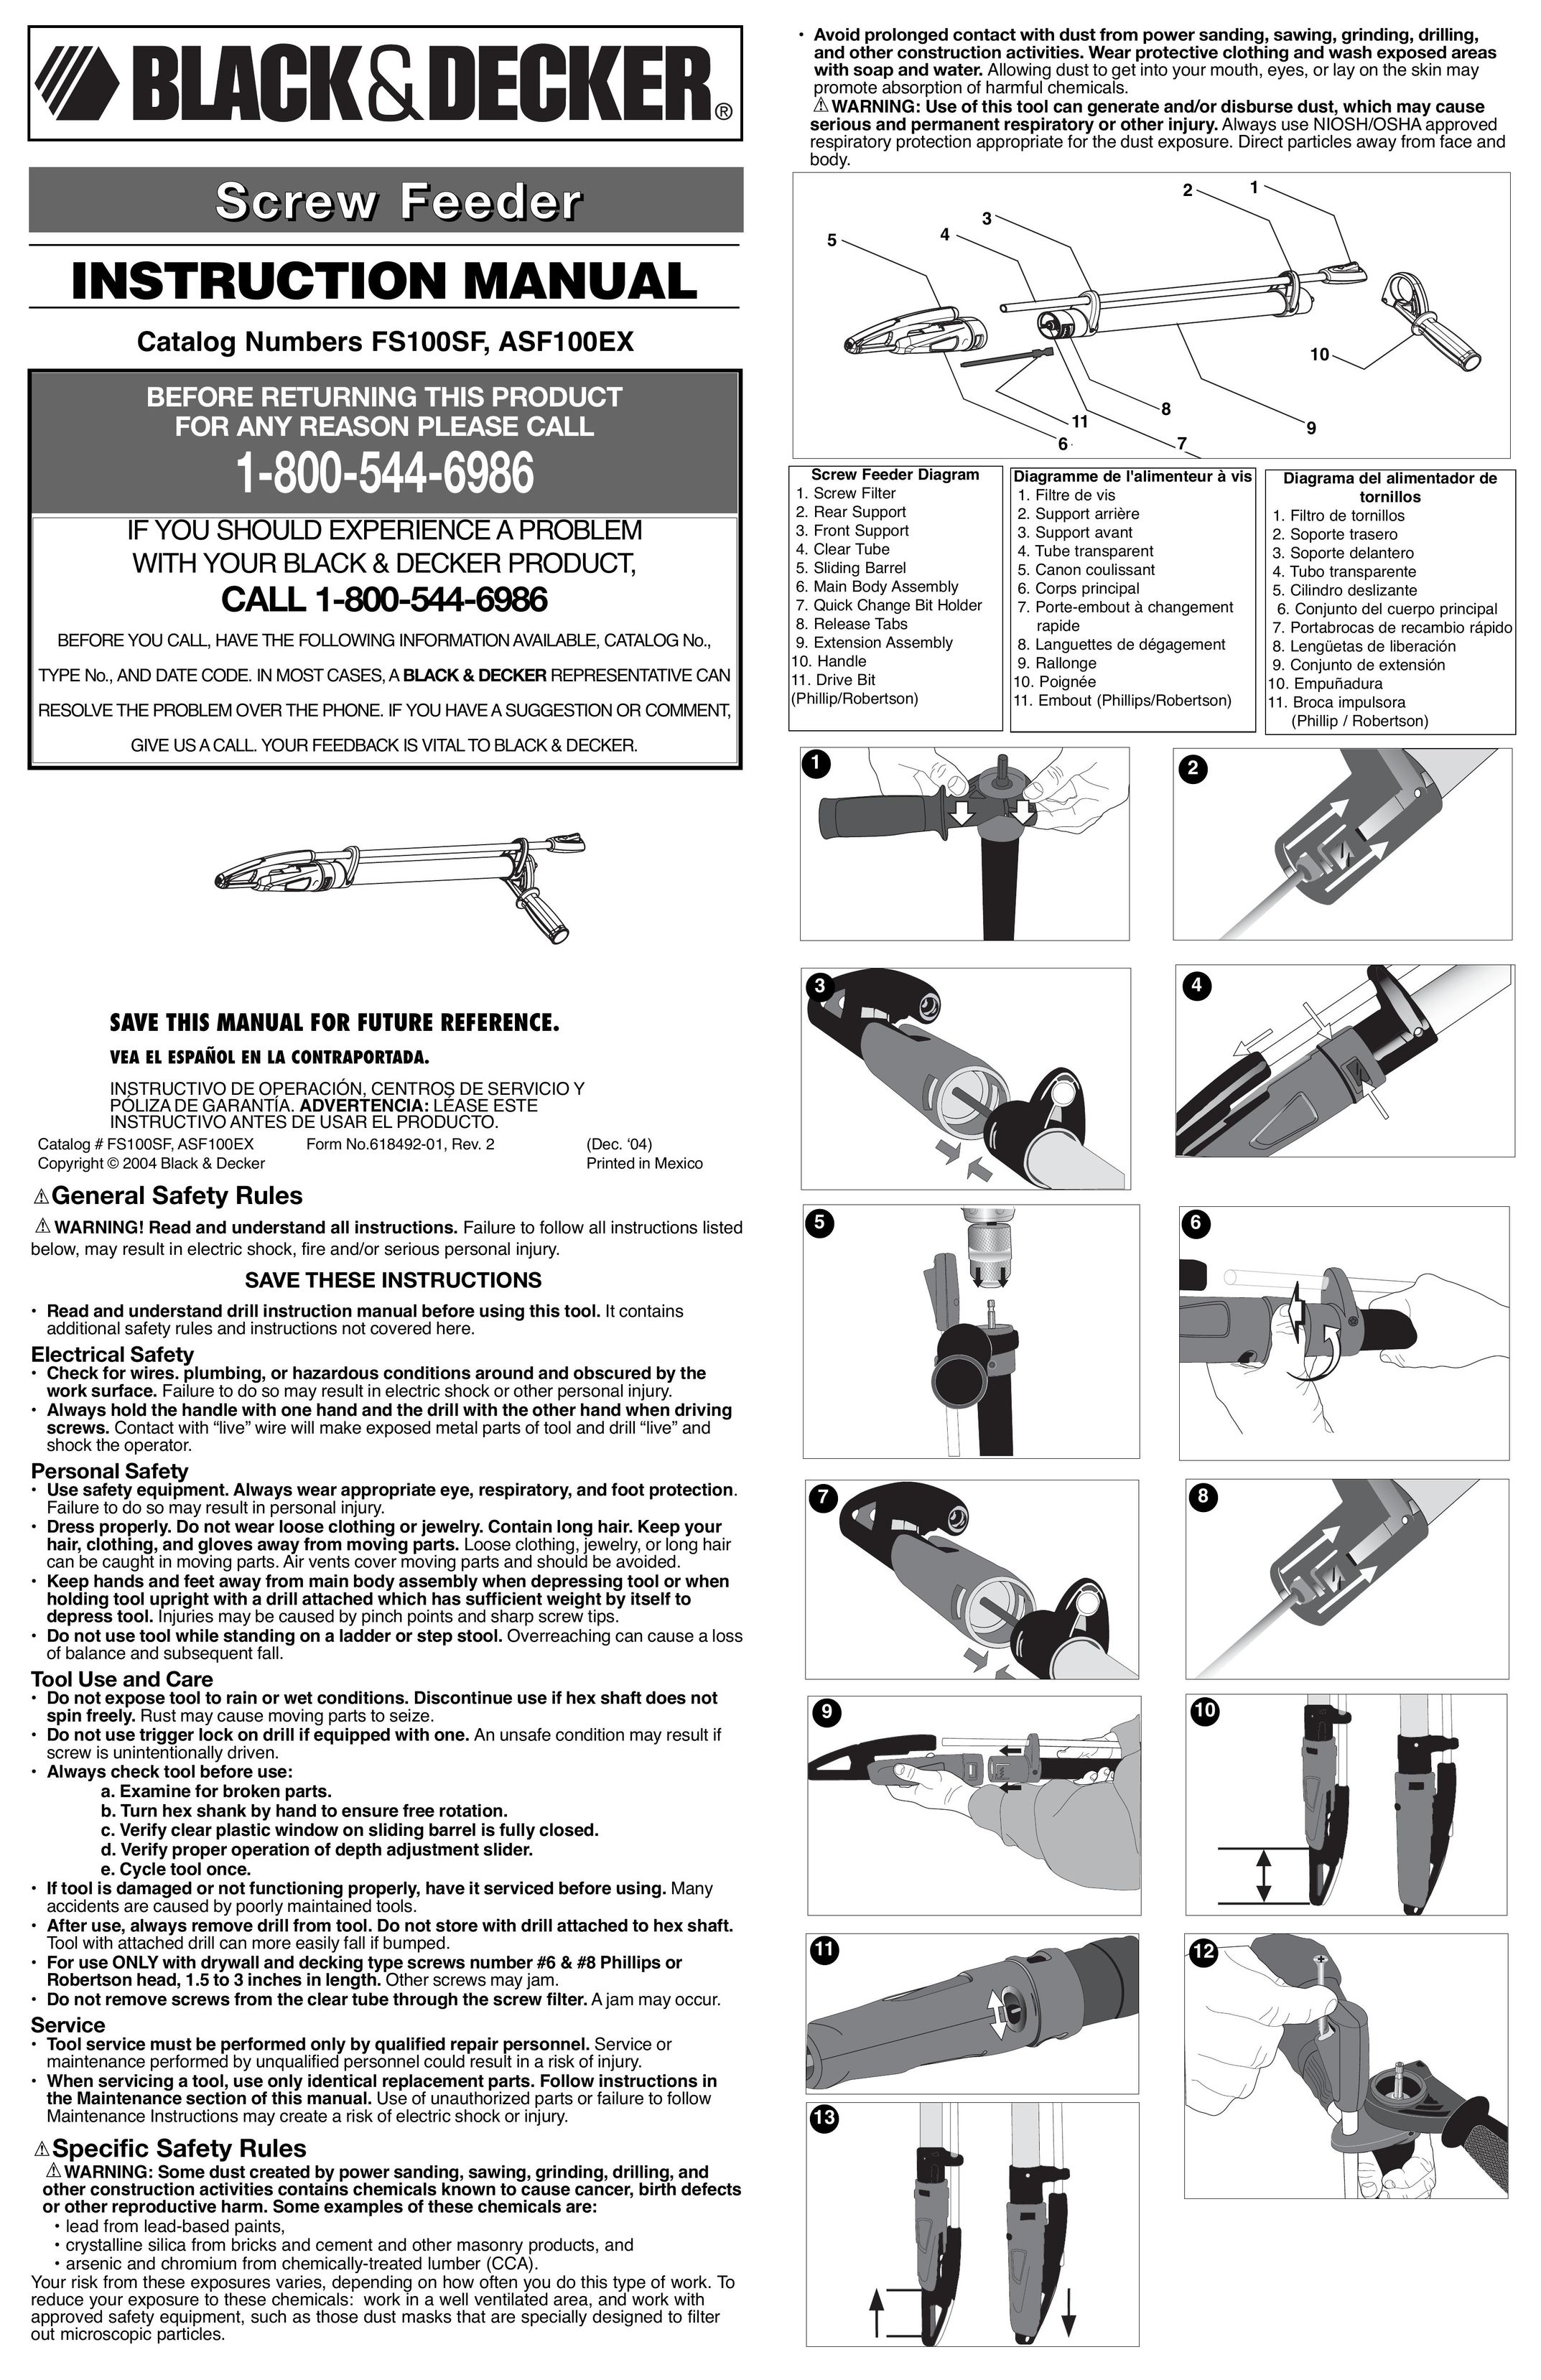 Black & Decker 618492-01 Power Screwdriver User Manual